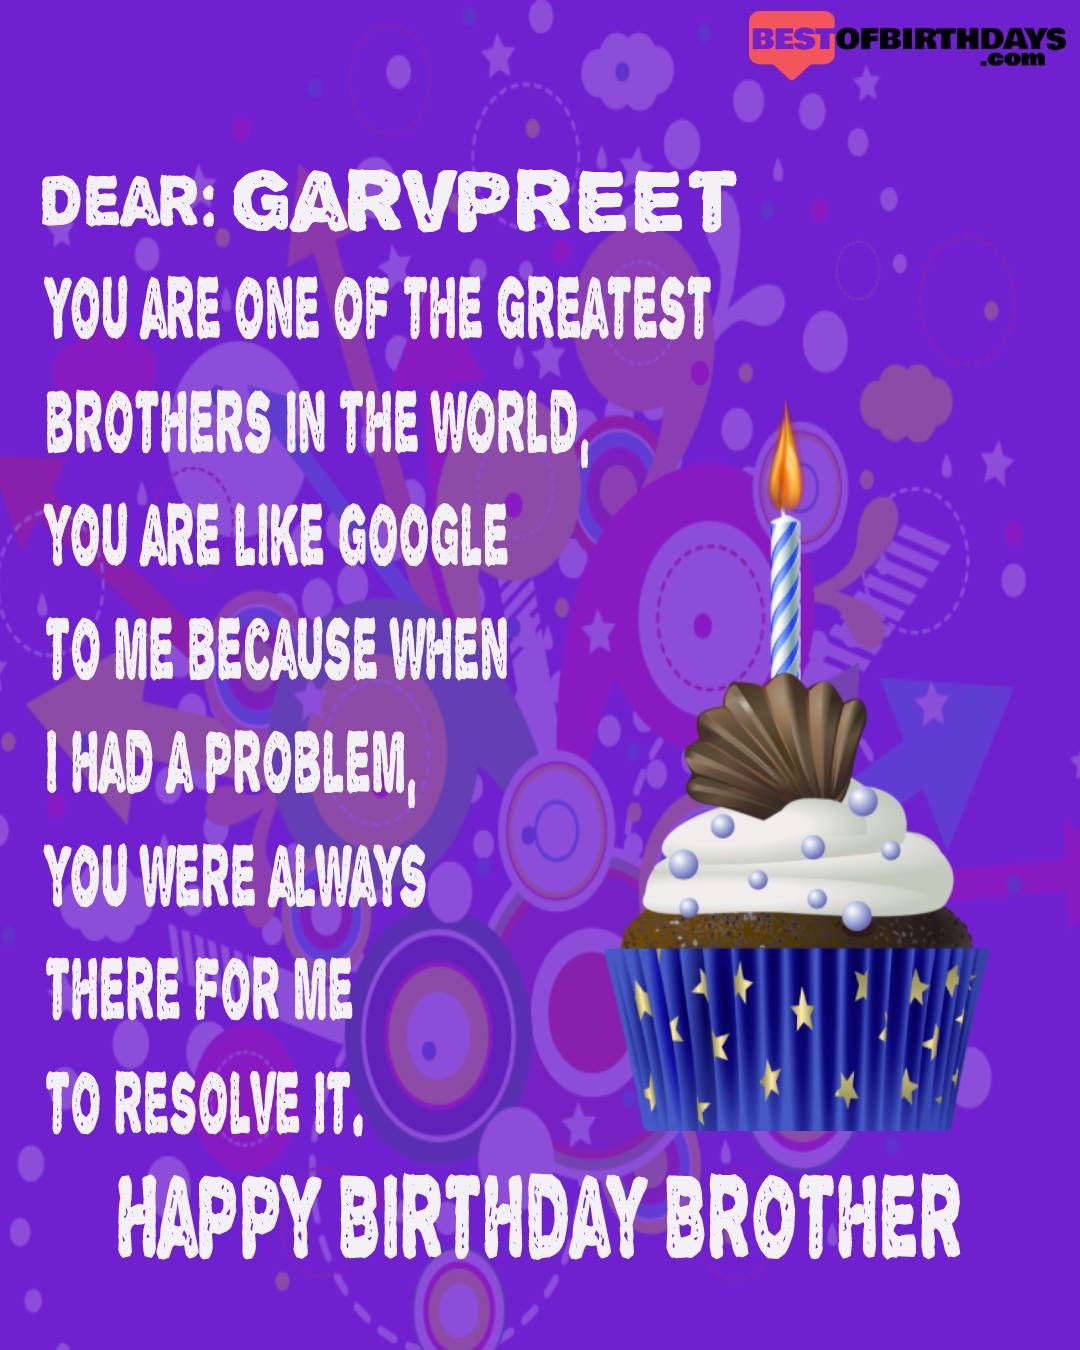 Happy birthday garvpreet bhai brother bro